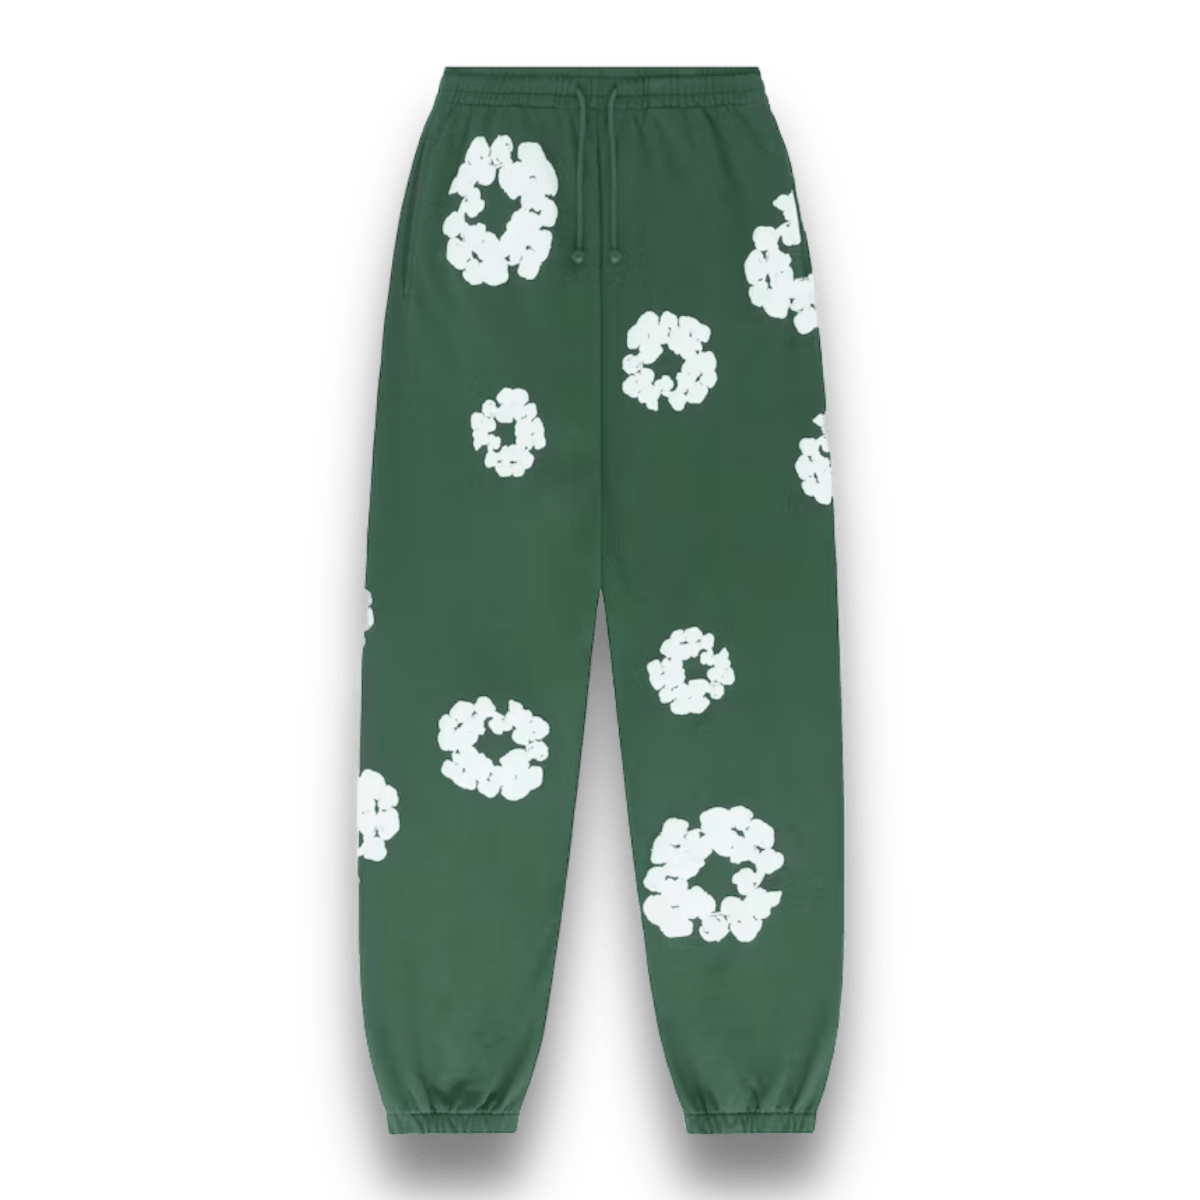 Denim Tears the Cotton Wreath Green Sweatpants - Clothing - Jawns on Fire Sneakers & Streetwear